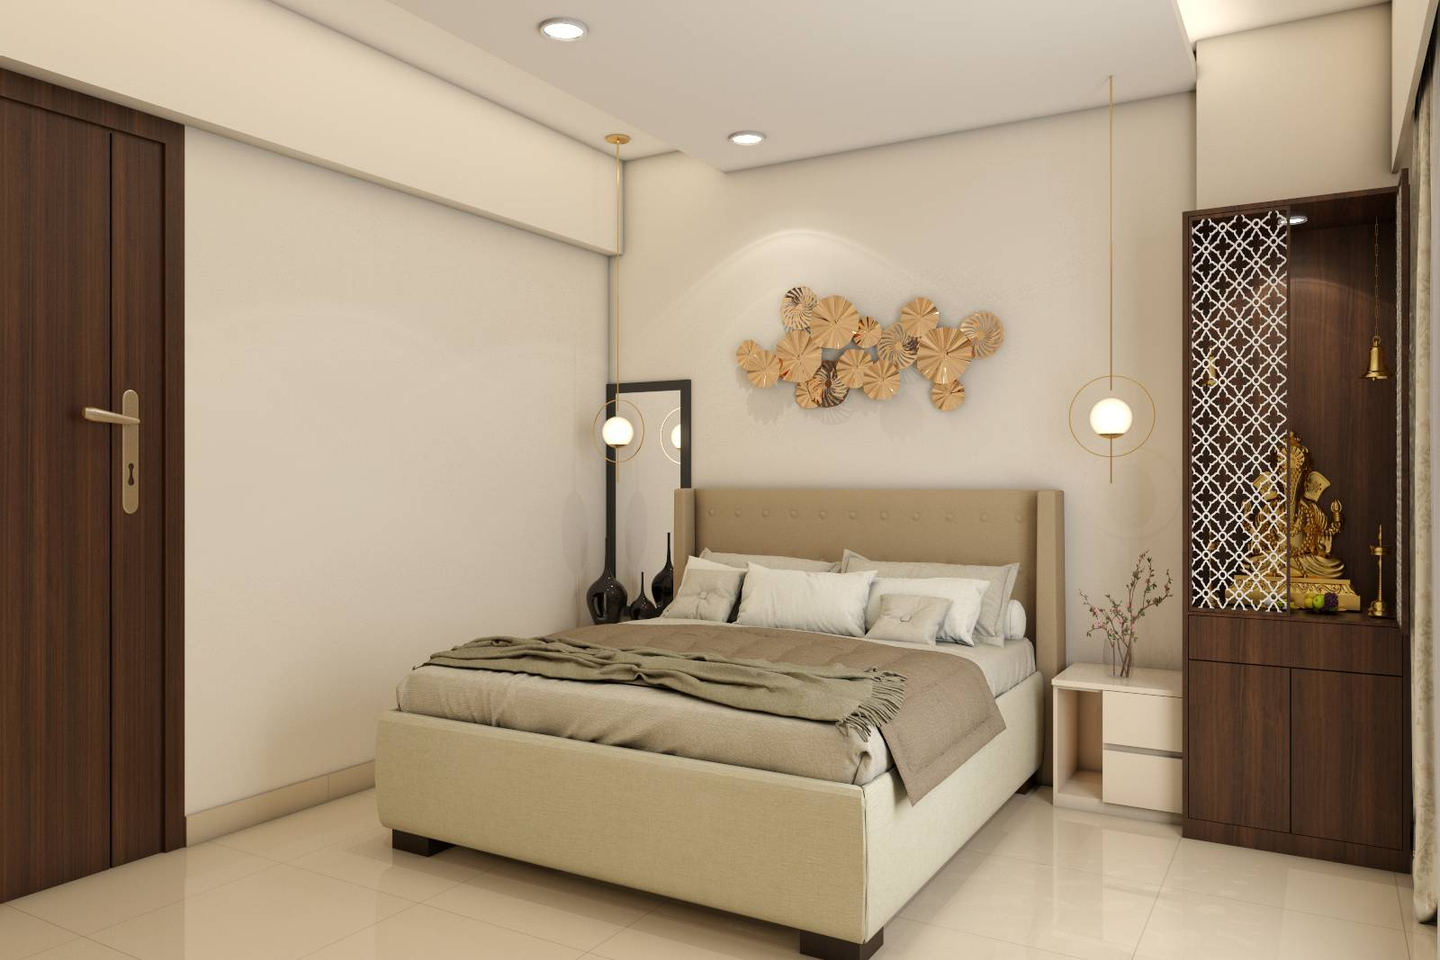 Kid's Bedroom With Pooja Unit - Livspace